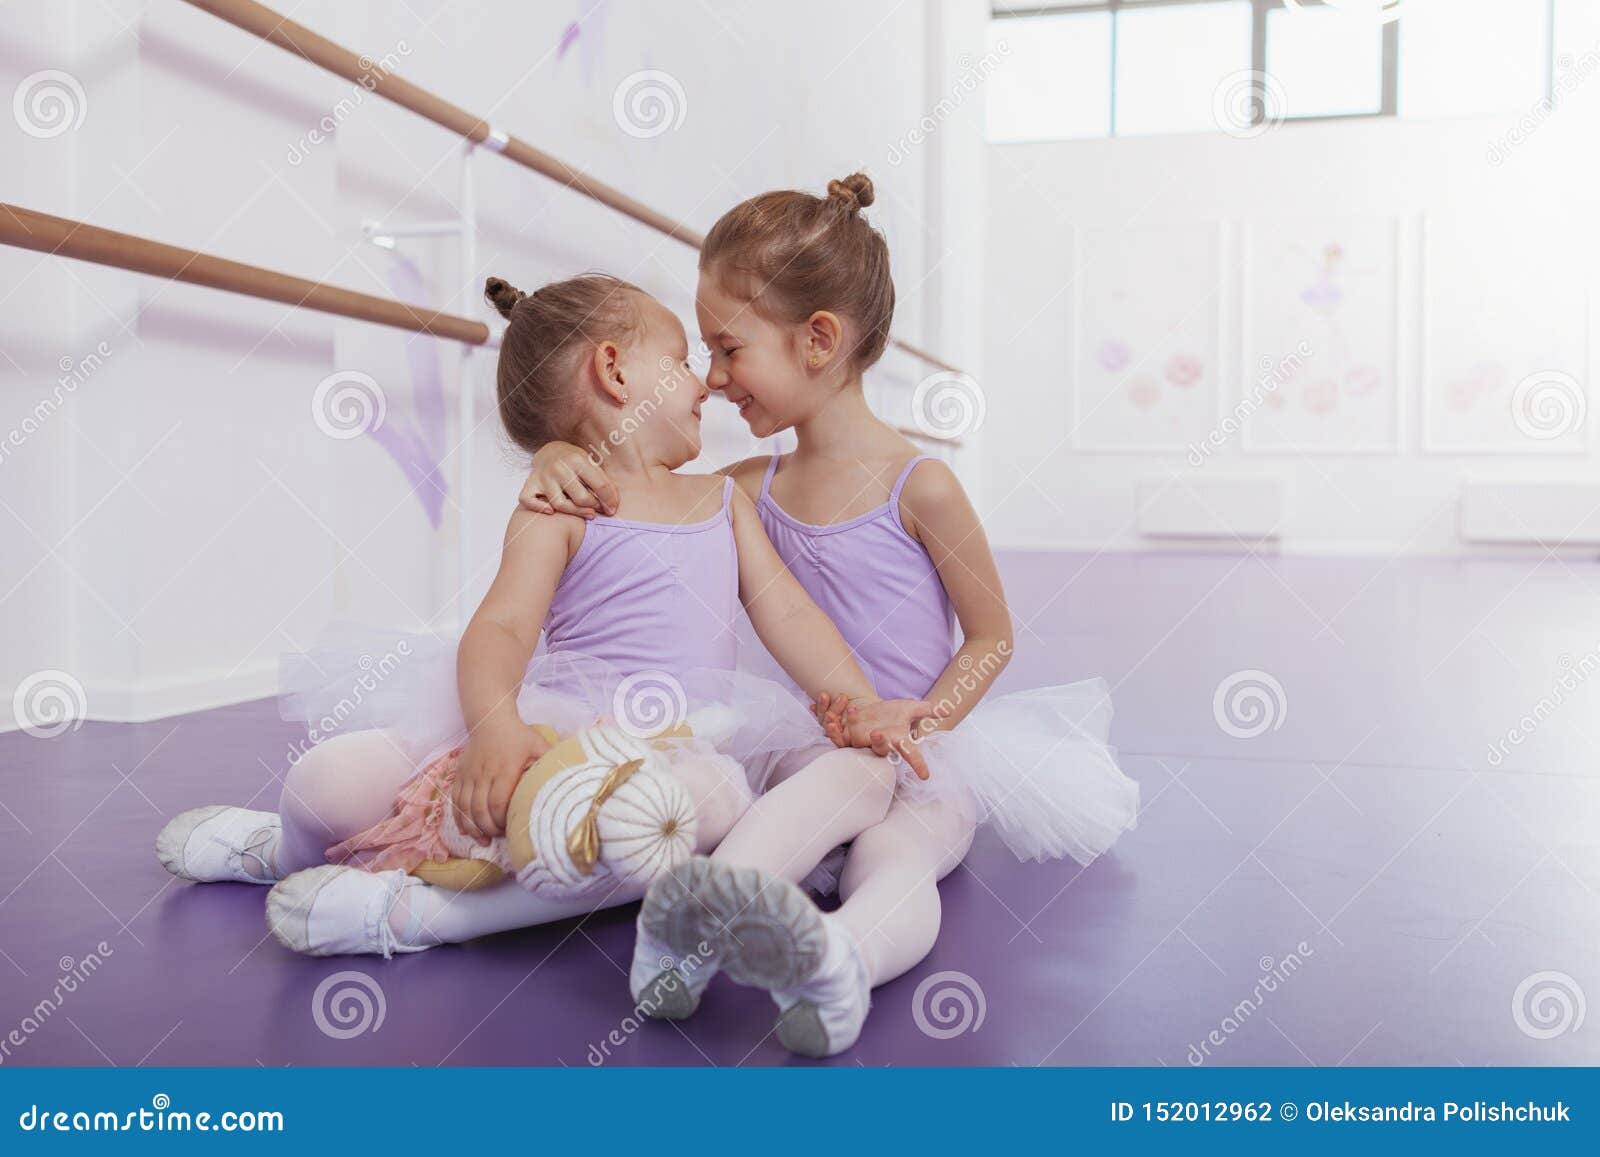 lindre at klemme tømmerflåde Two Adorable Little Ballerinas at Dance Class Stock Photo - Image of  children, achievement: 152012962